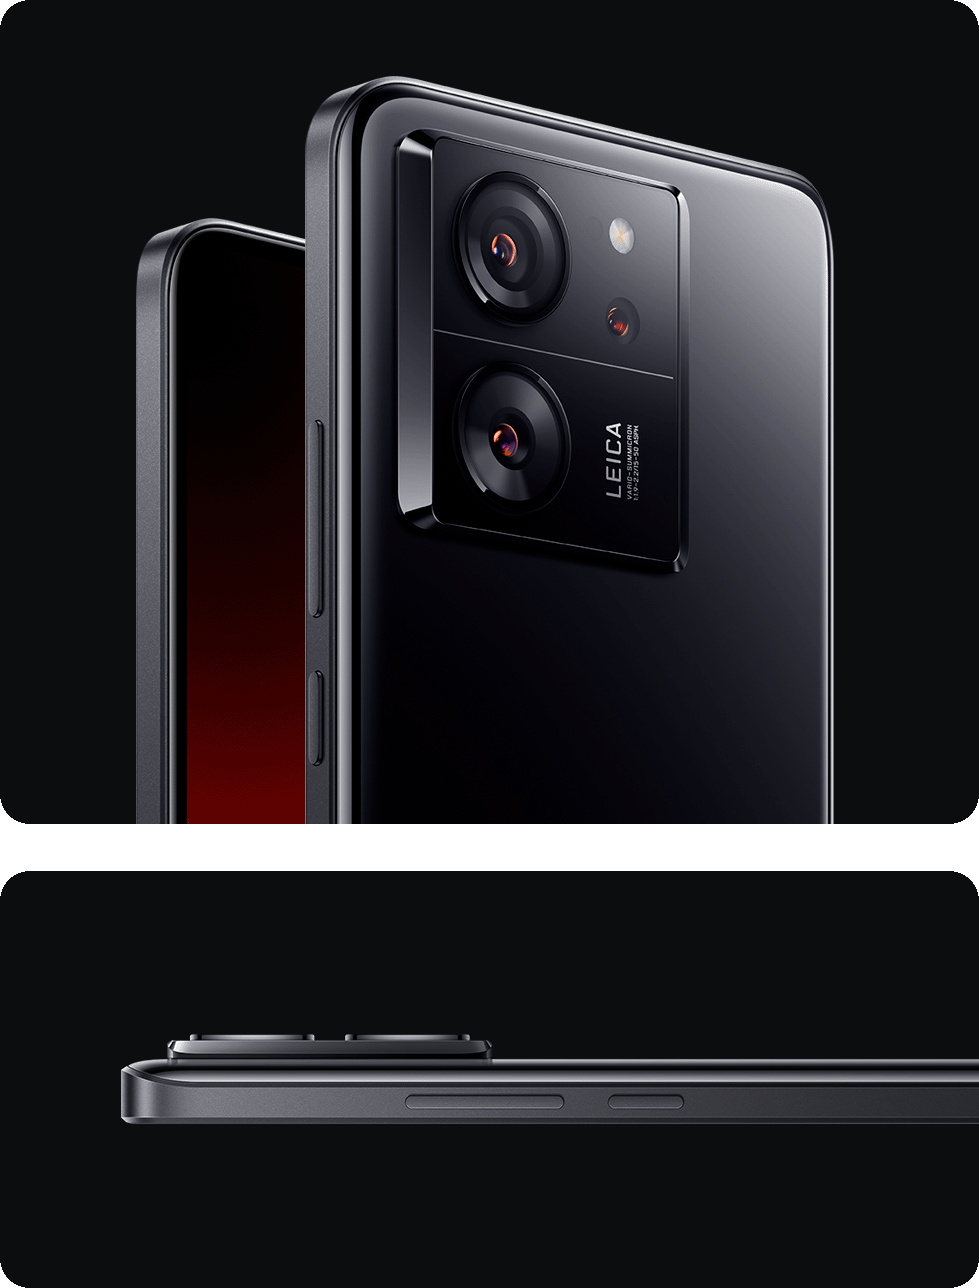 Xiaomi 13T Pro - Smartphone de 12+512GB, Cámara Leica, Pantalla